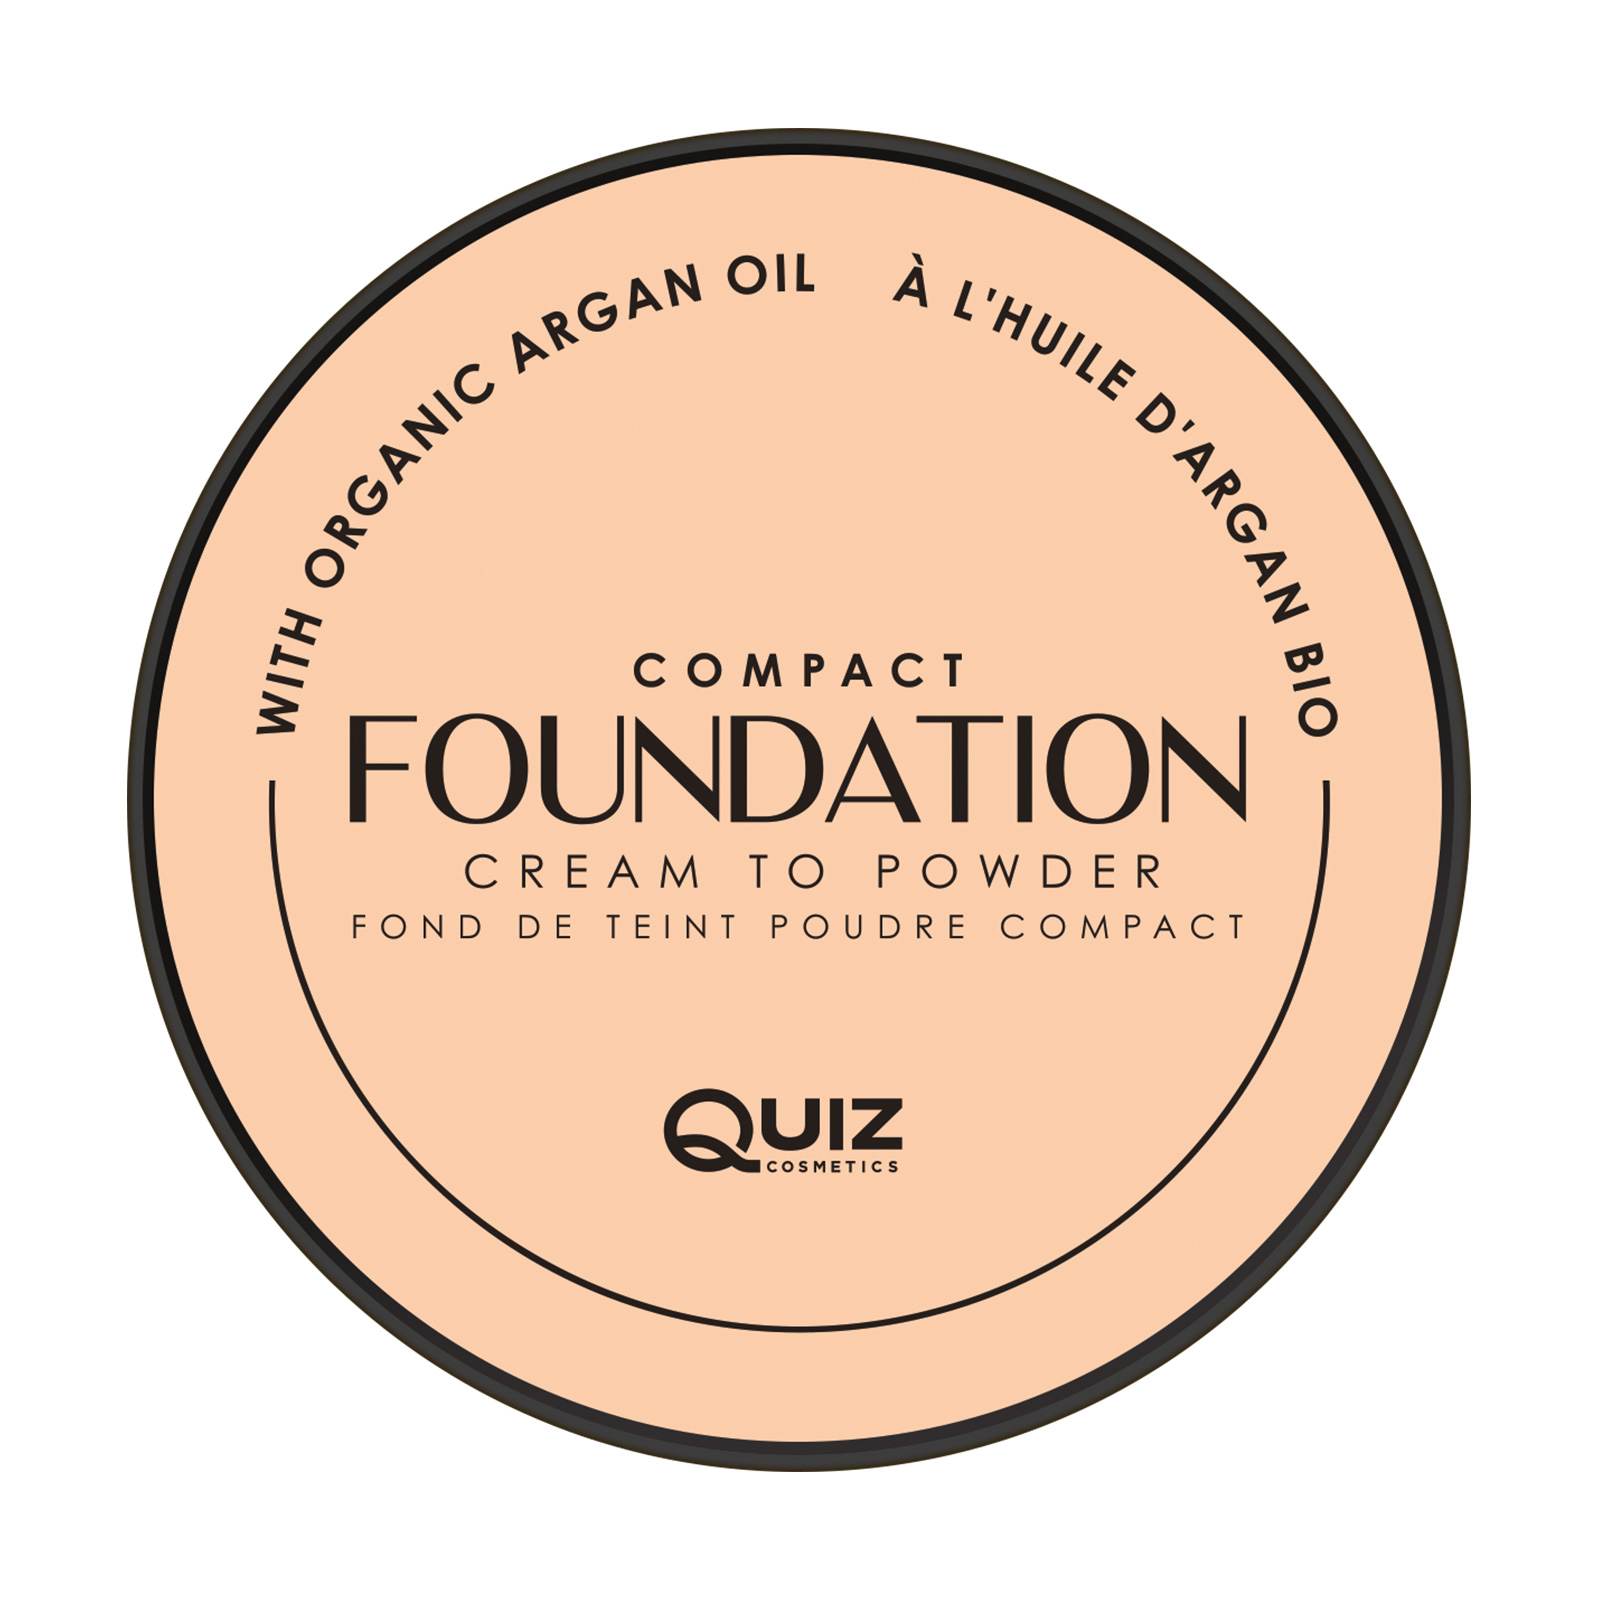 Foundation Compact Cream To Powder Light 10gr QUIZ 1313CREAMF-1 - QUIZ - nj_1313CREAMF-1 172002